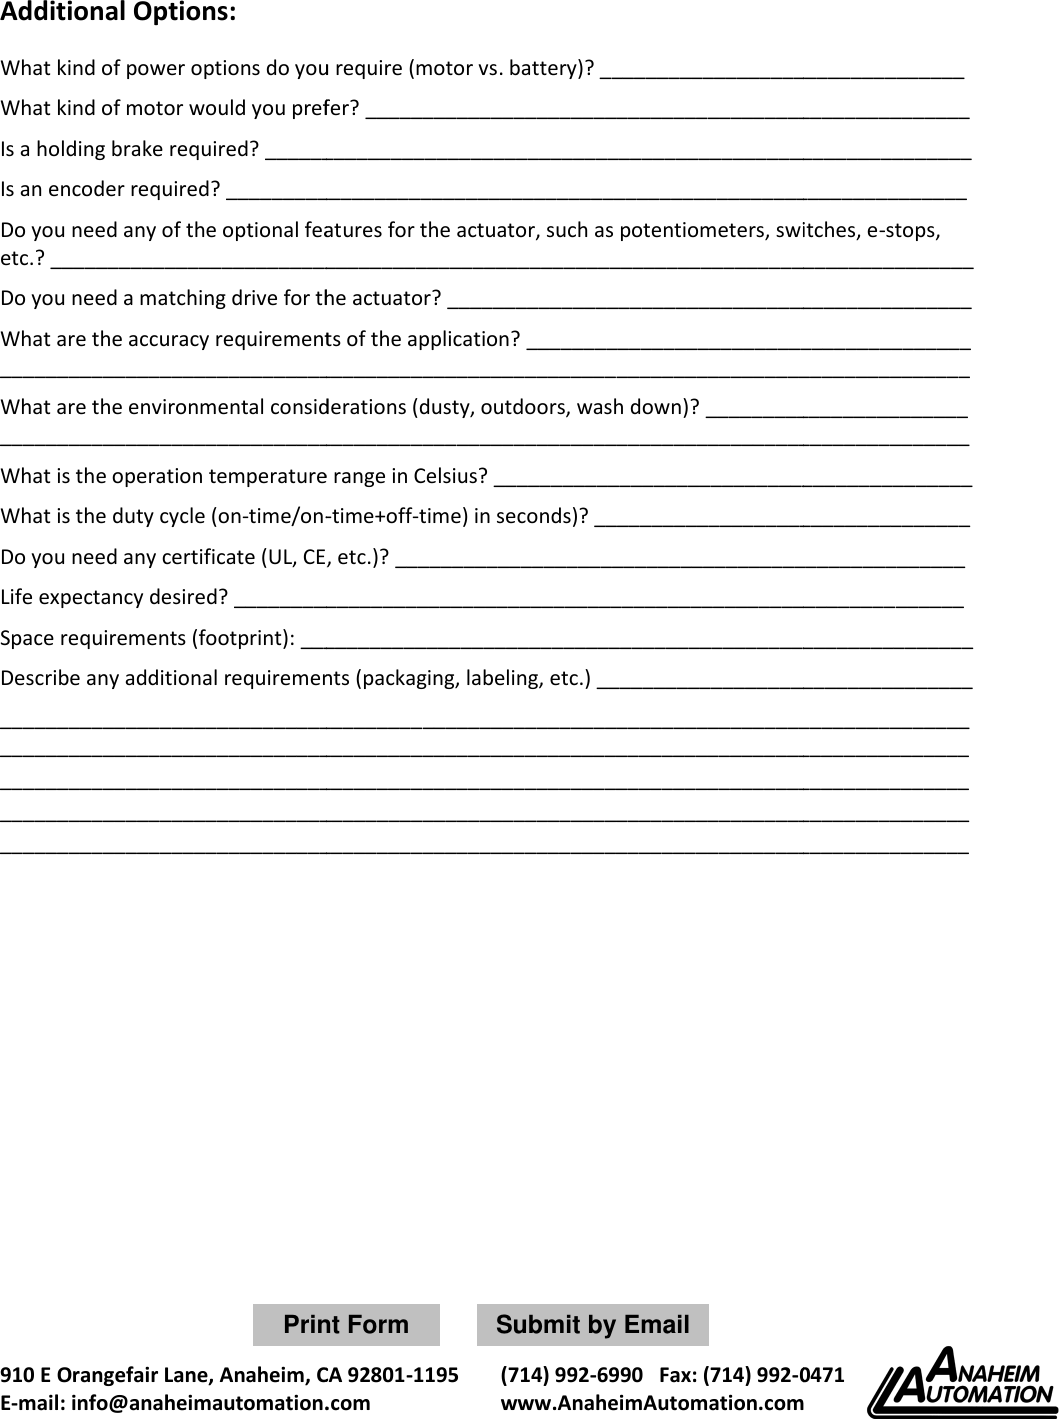 Page 2 of 2 - Linear Actuator Application Sheetx Sheet